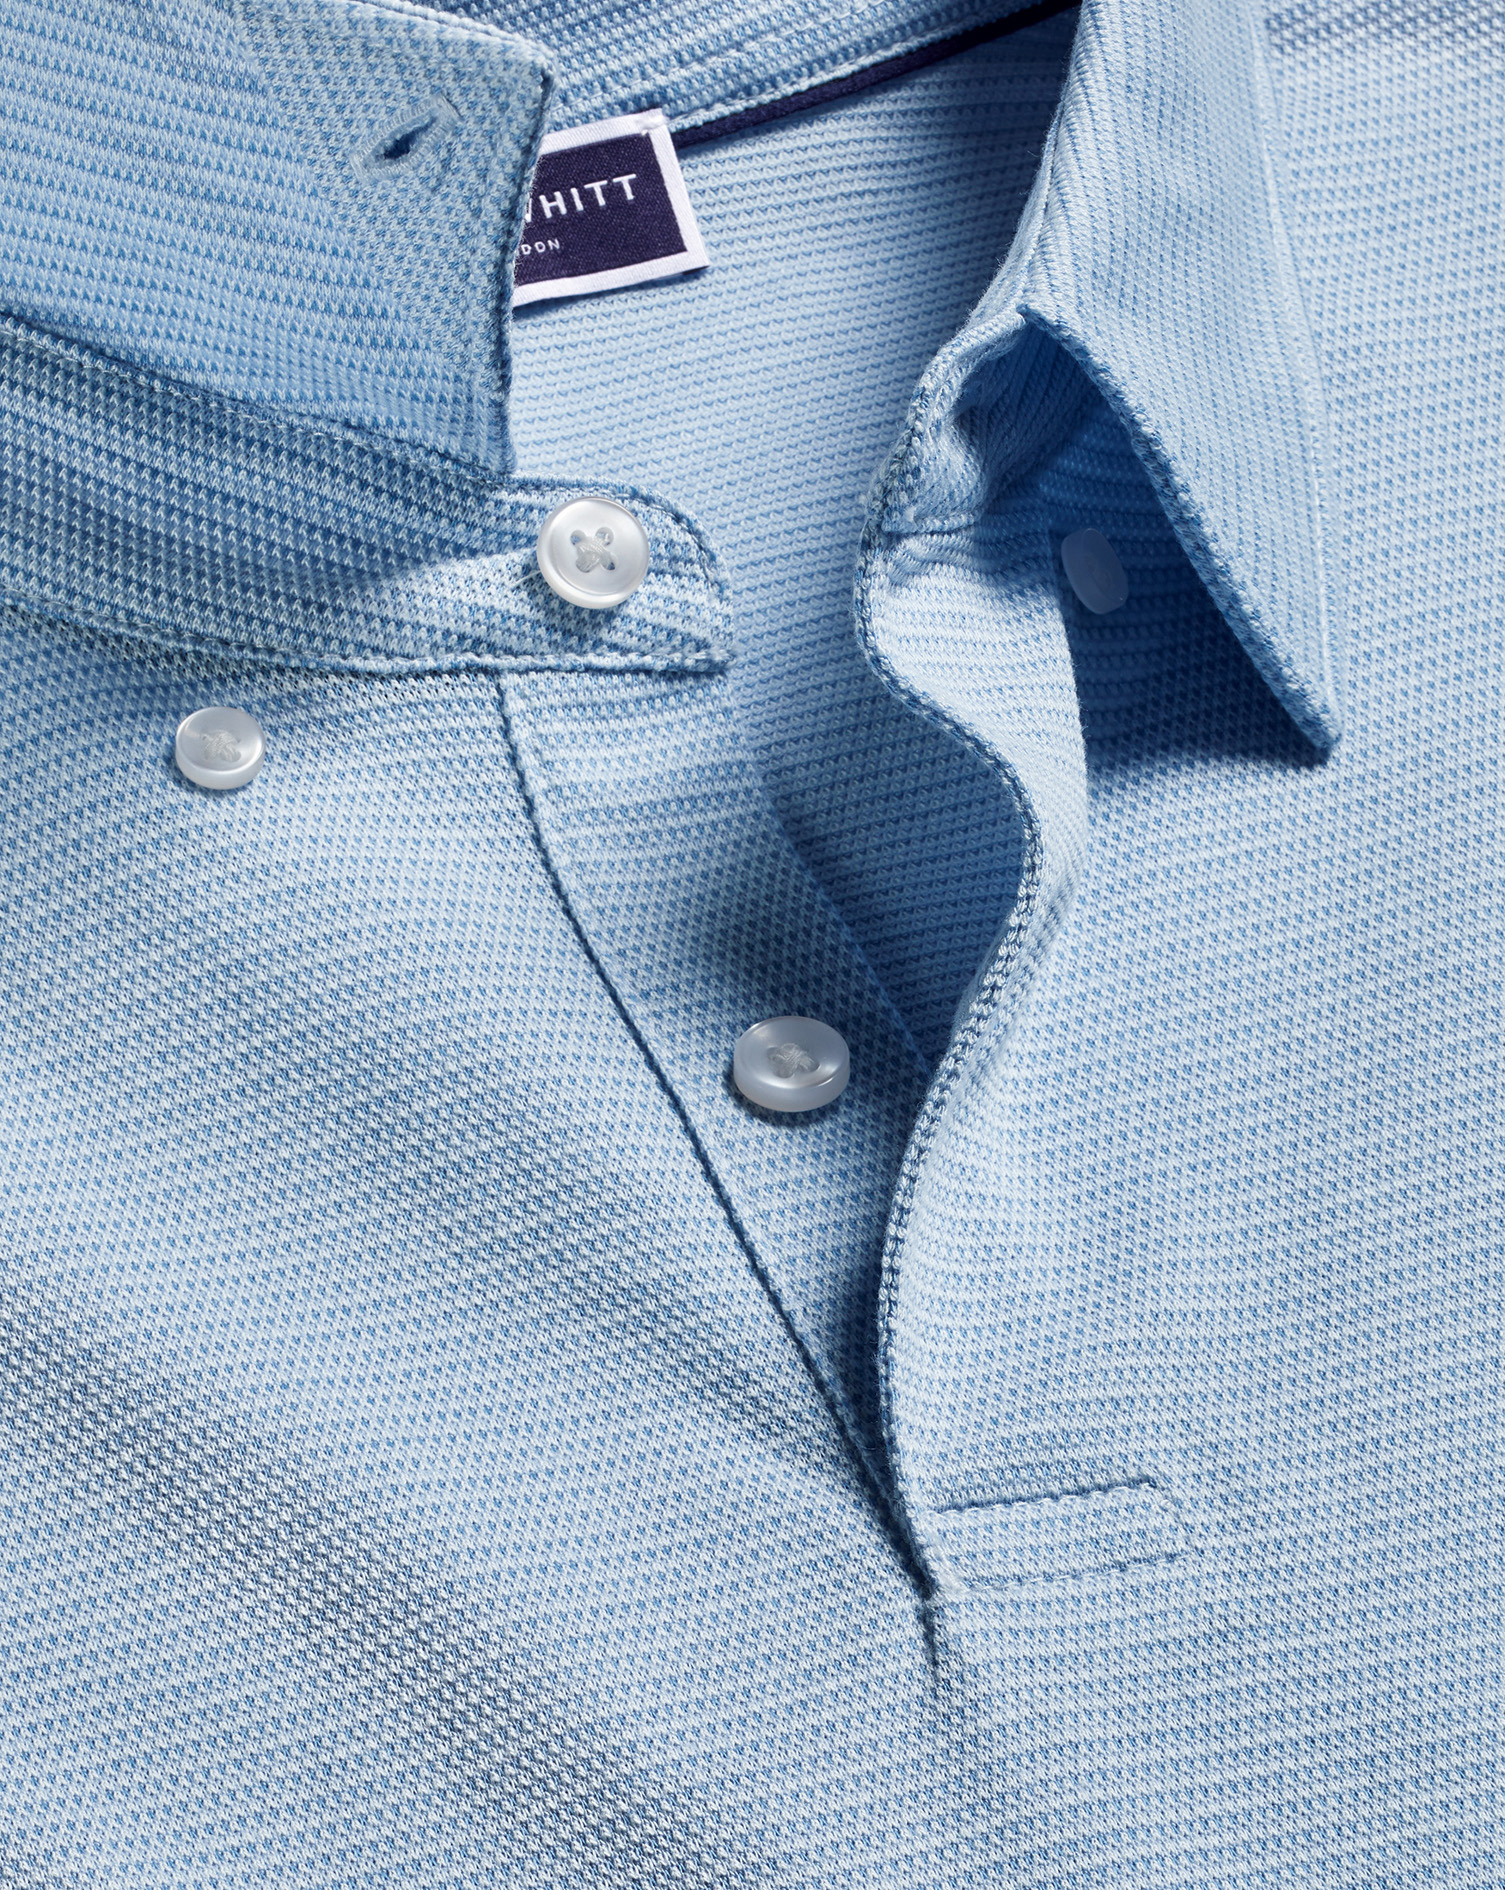 Louis Vuitton Navy Blue Monogram Printed Knit Polo T-Shirt XXL Louis  Vuitton | The Luxury Closet